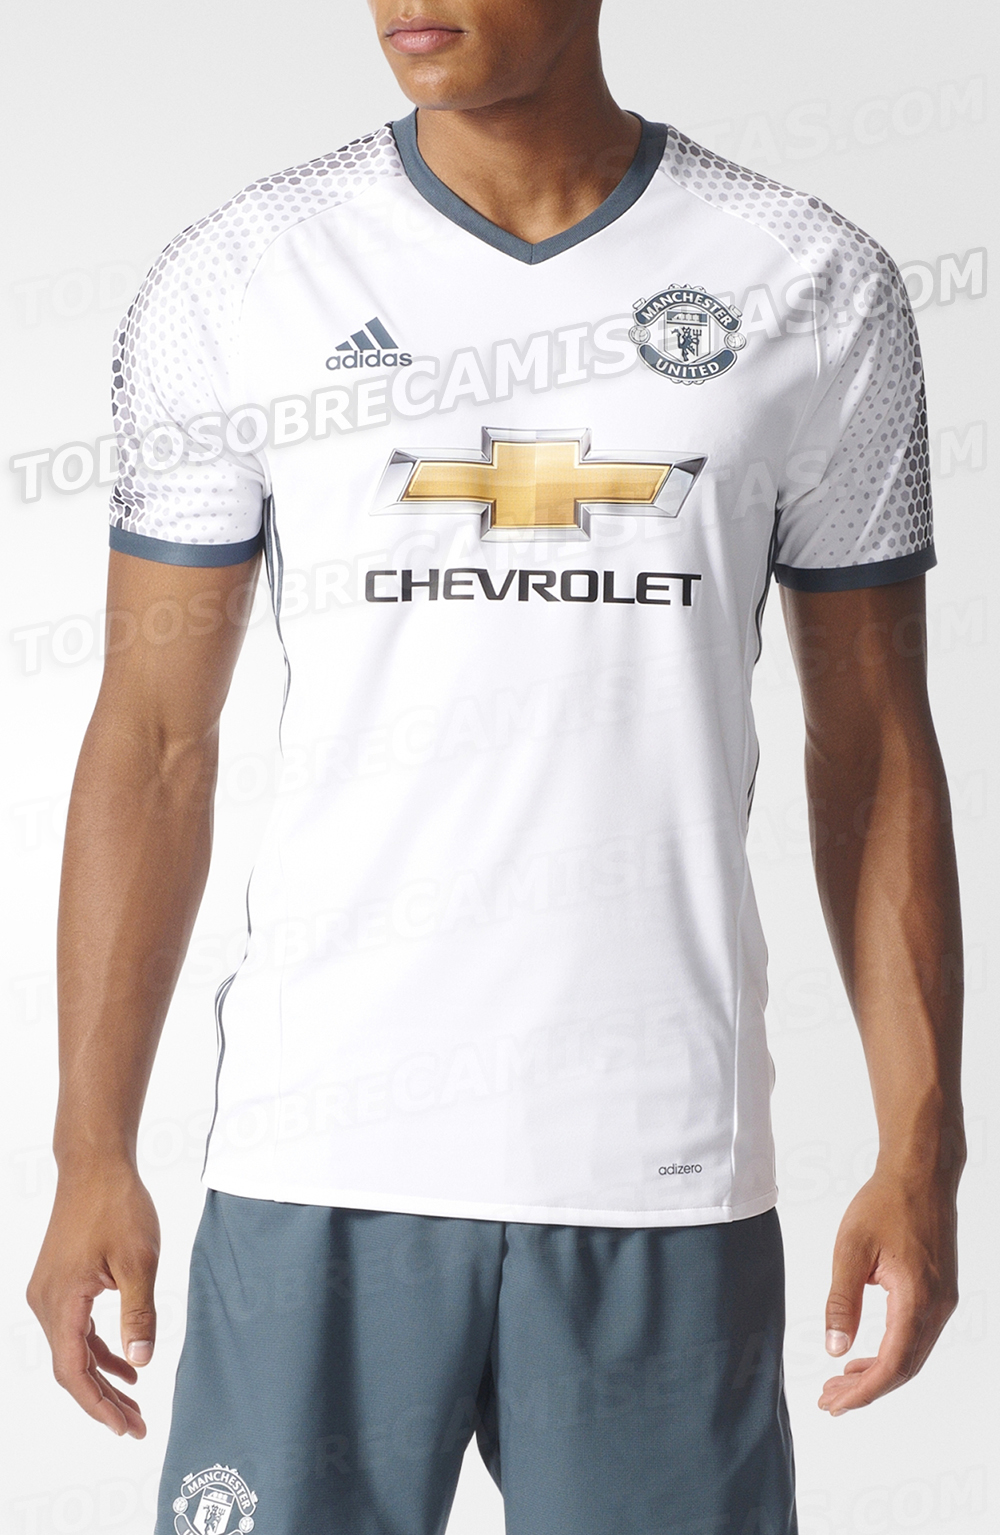 Manchester United 2016-17 adidas third kit LEAKED